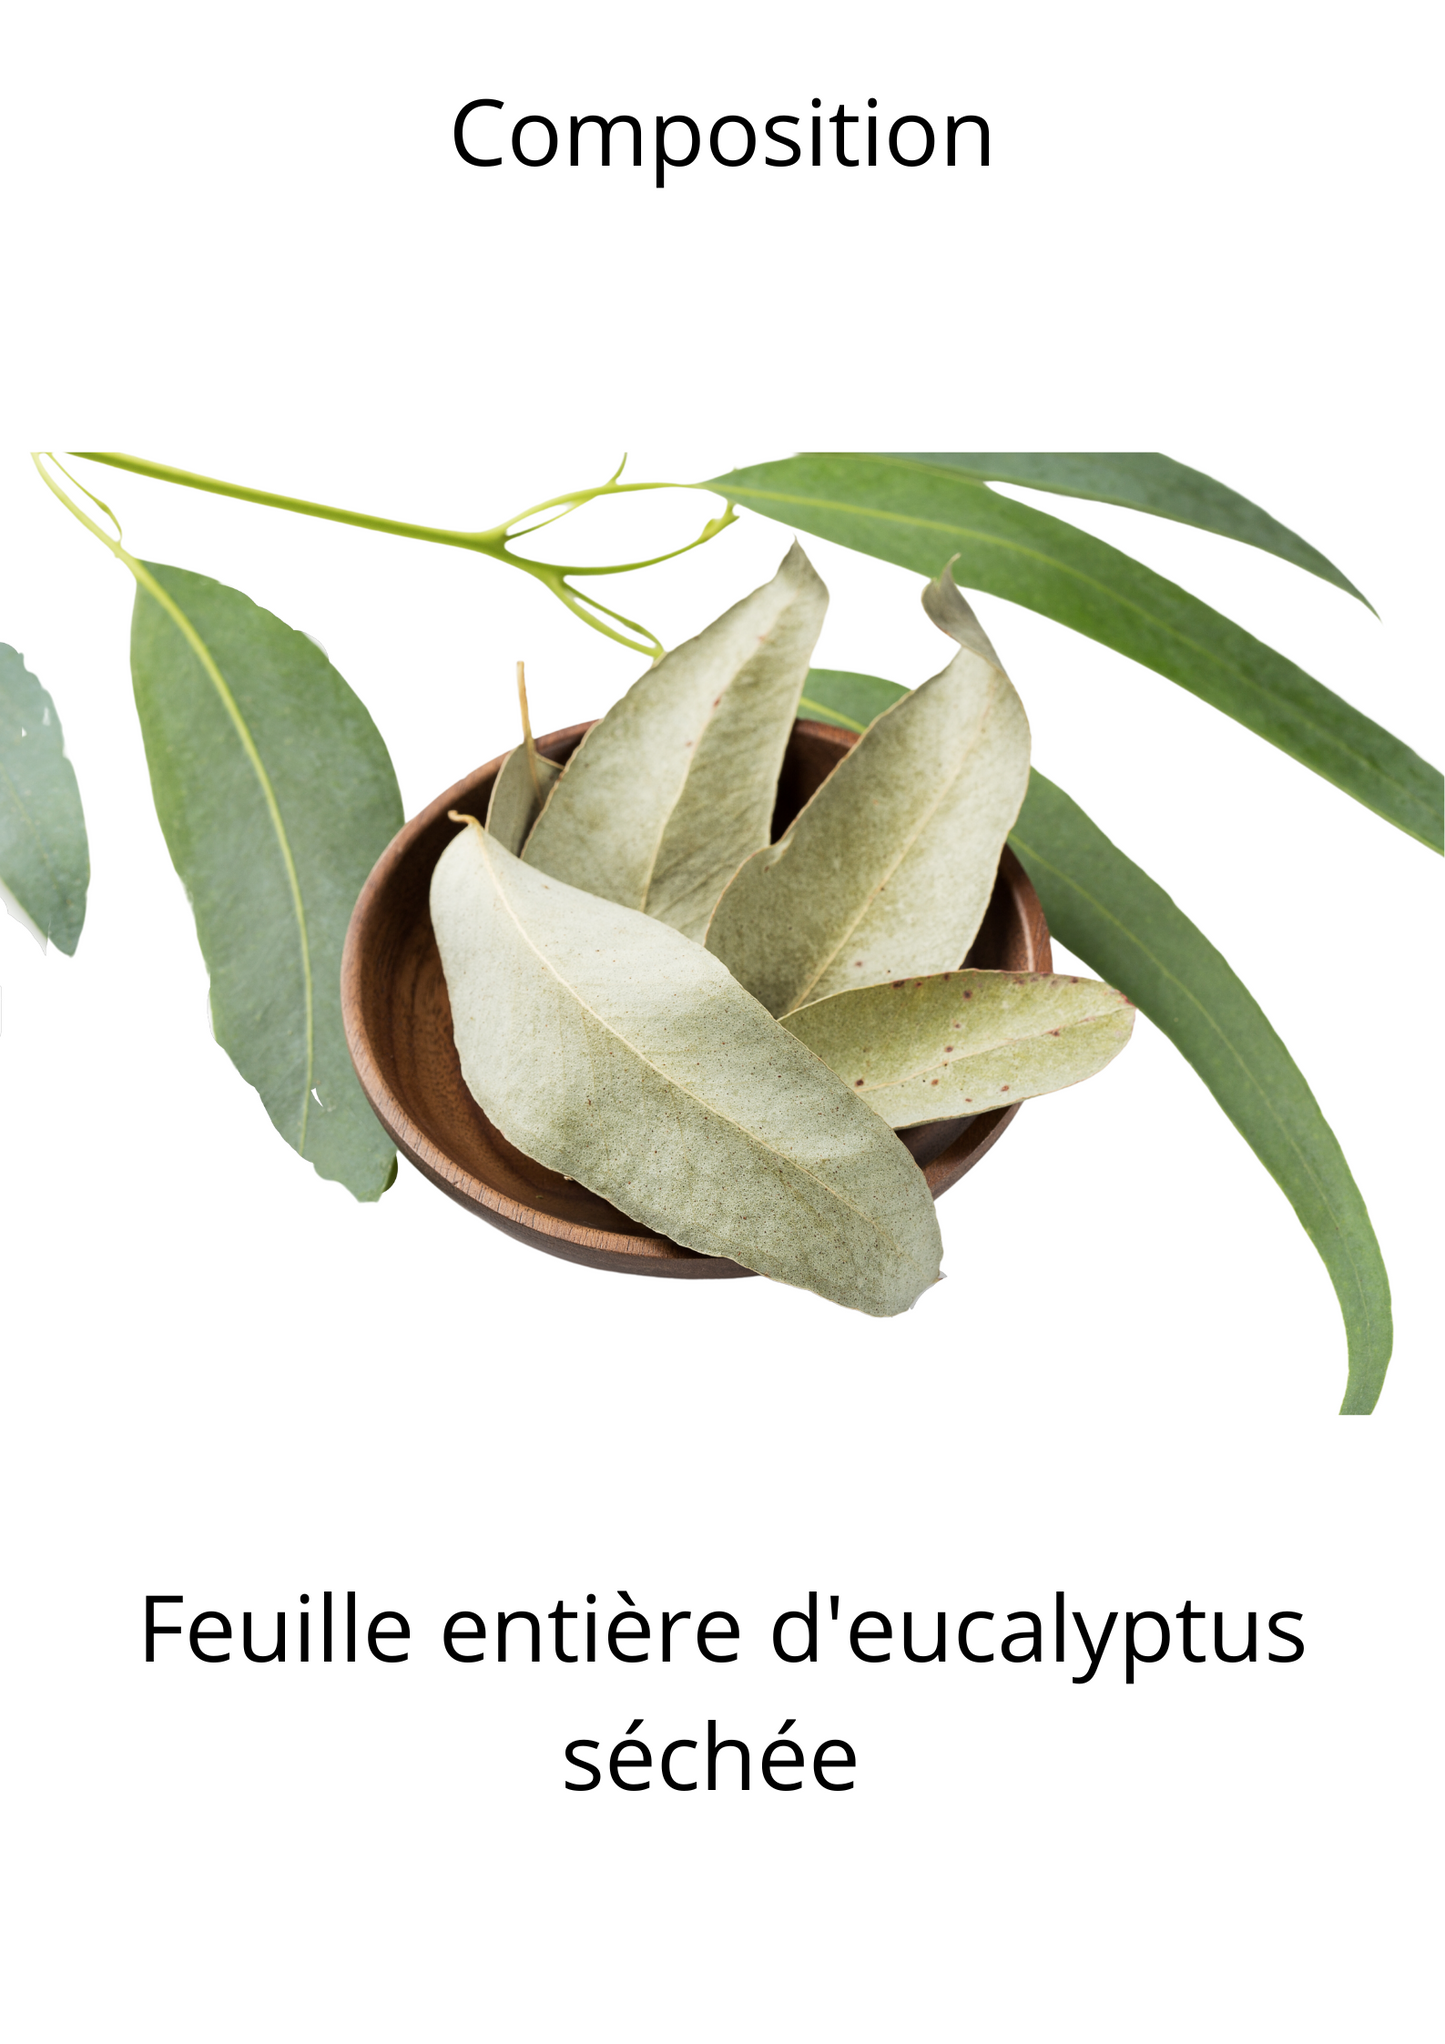 Organic whole leaf eucalyptus